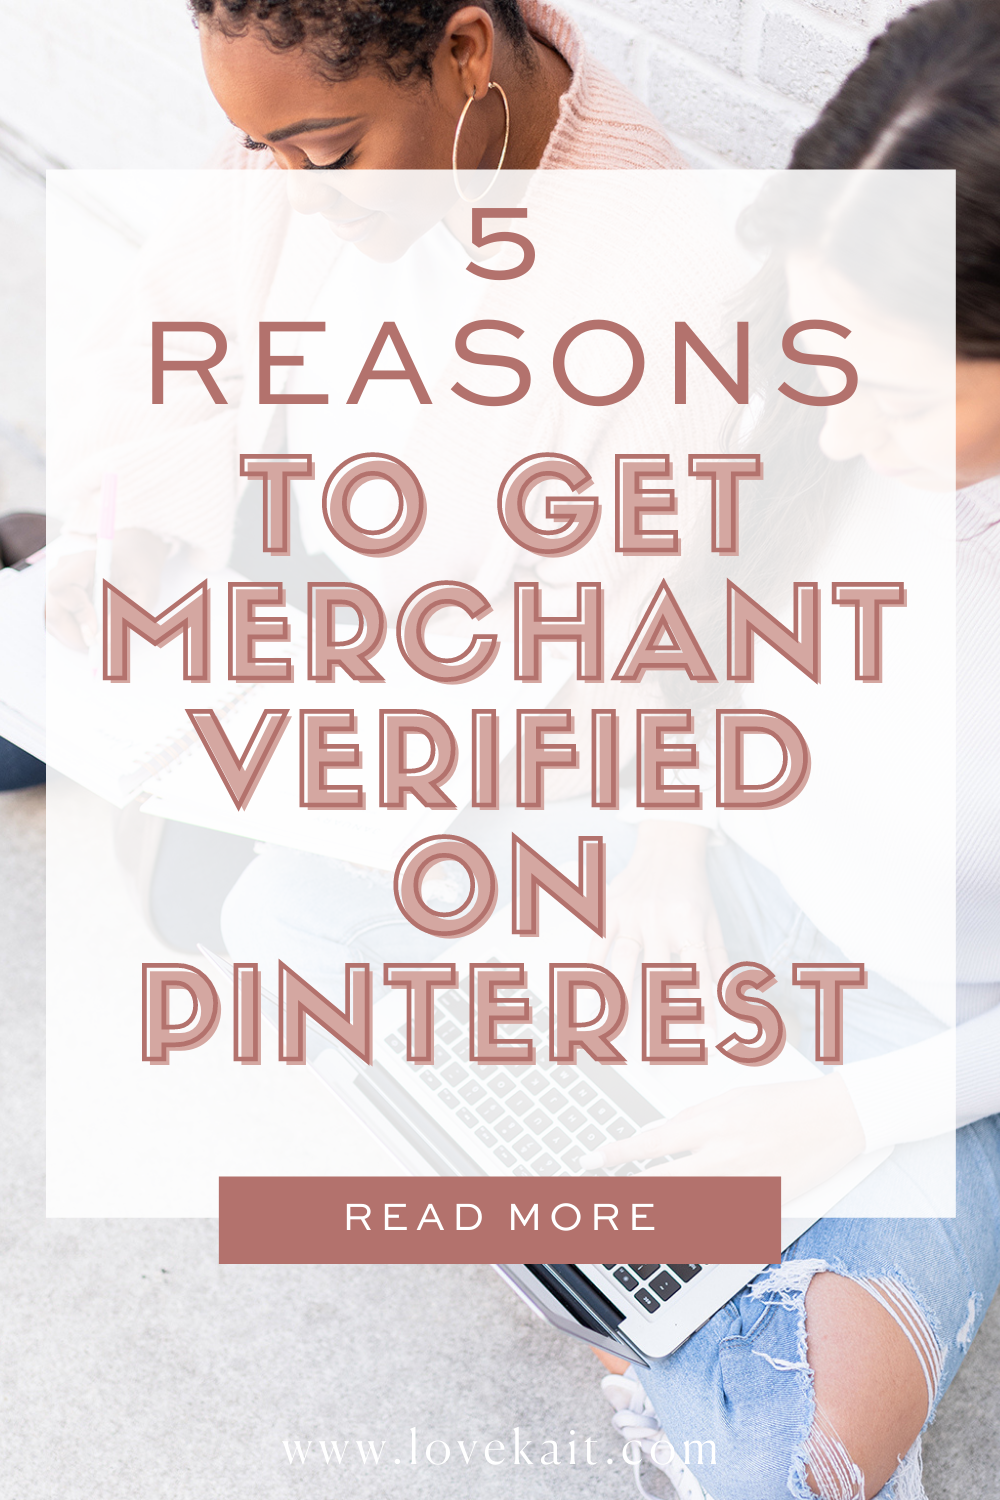 5 reasons to get merchant verified on pinterest